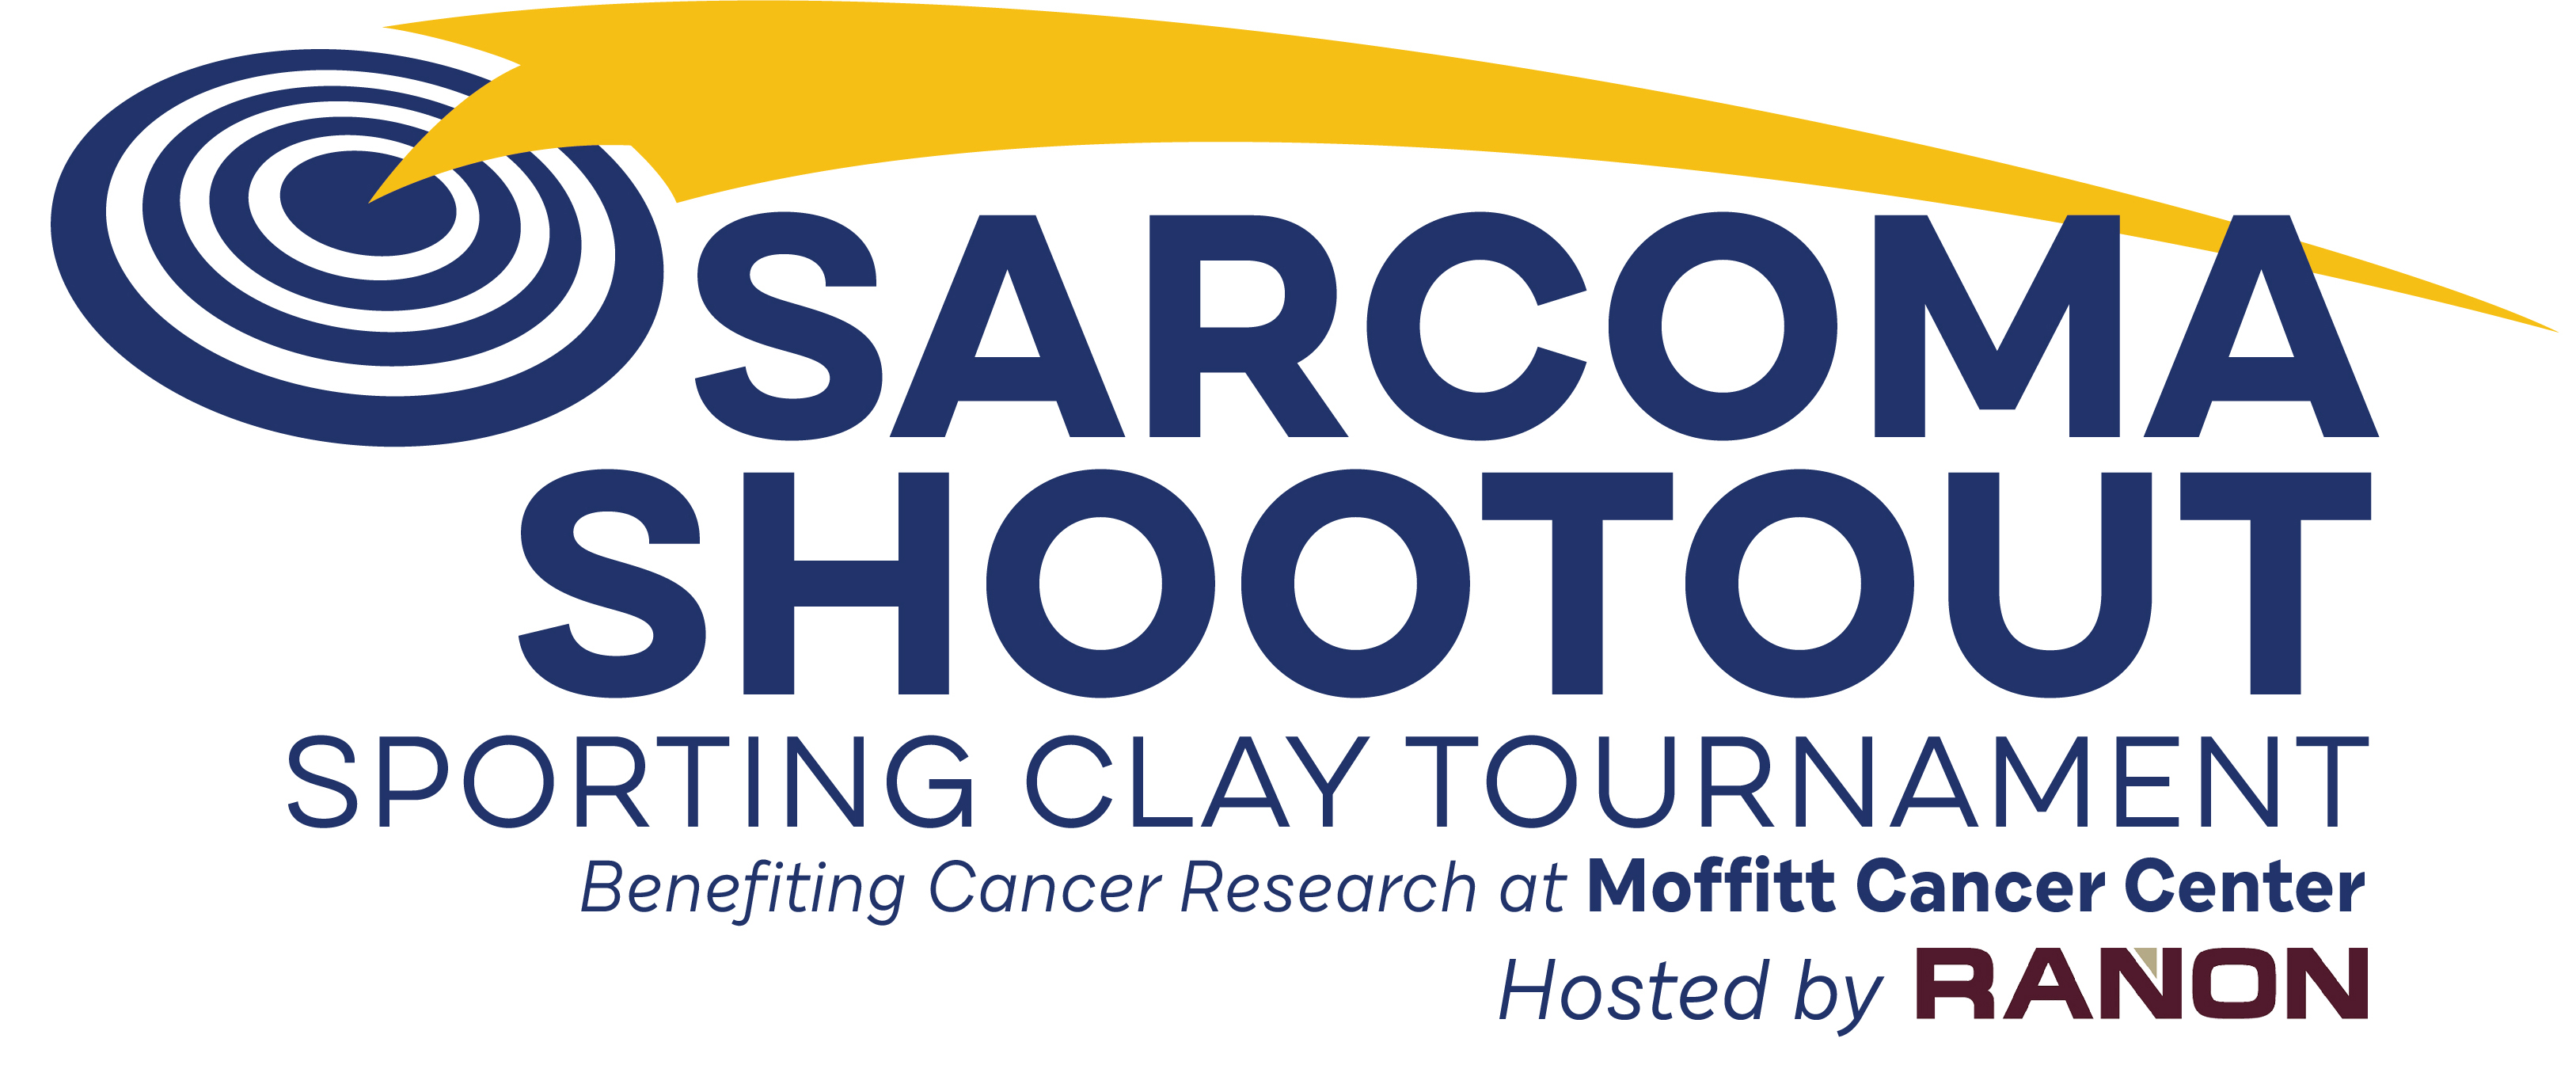 2022 Sarcoma Shootout Logo UPDATED